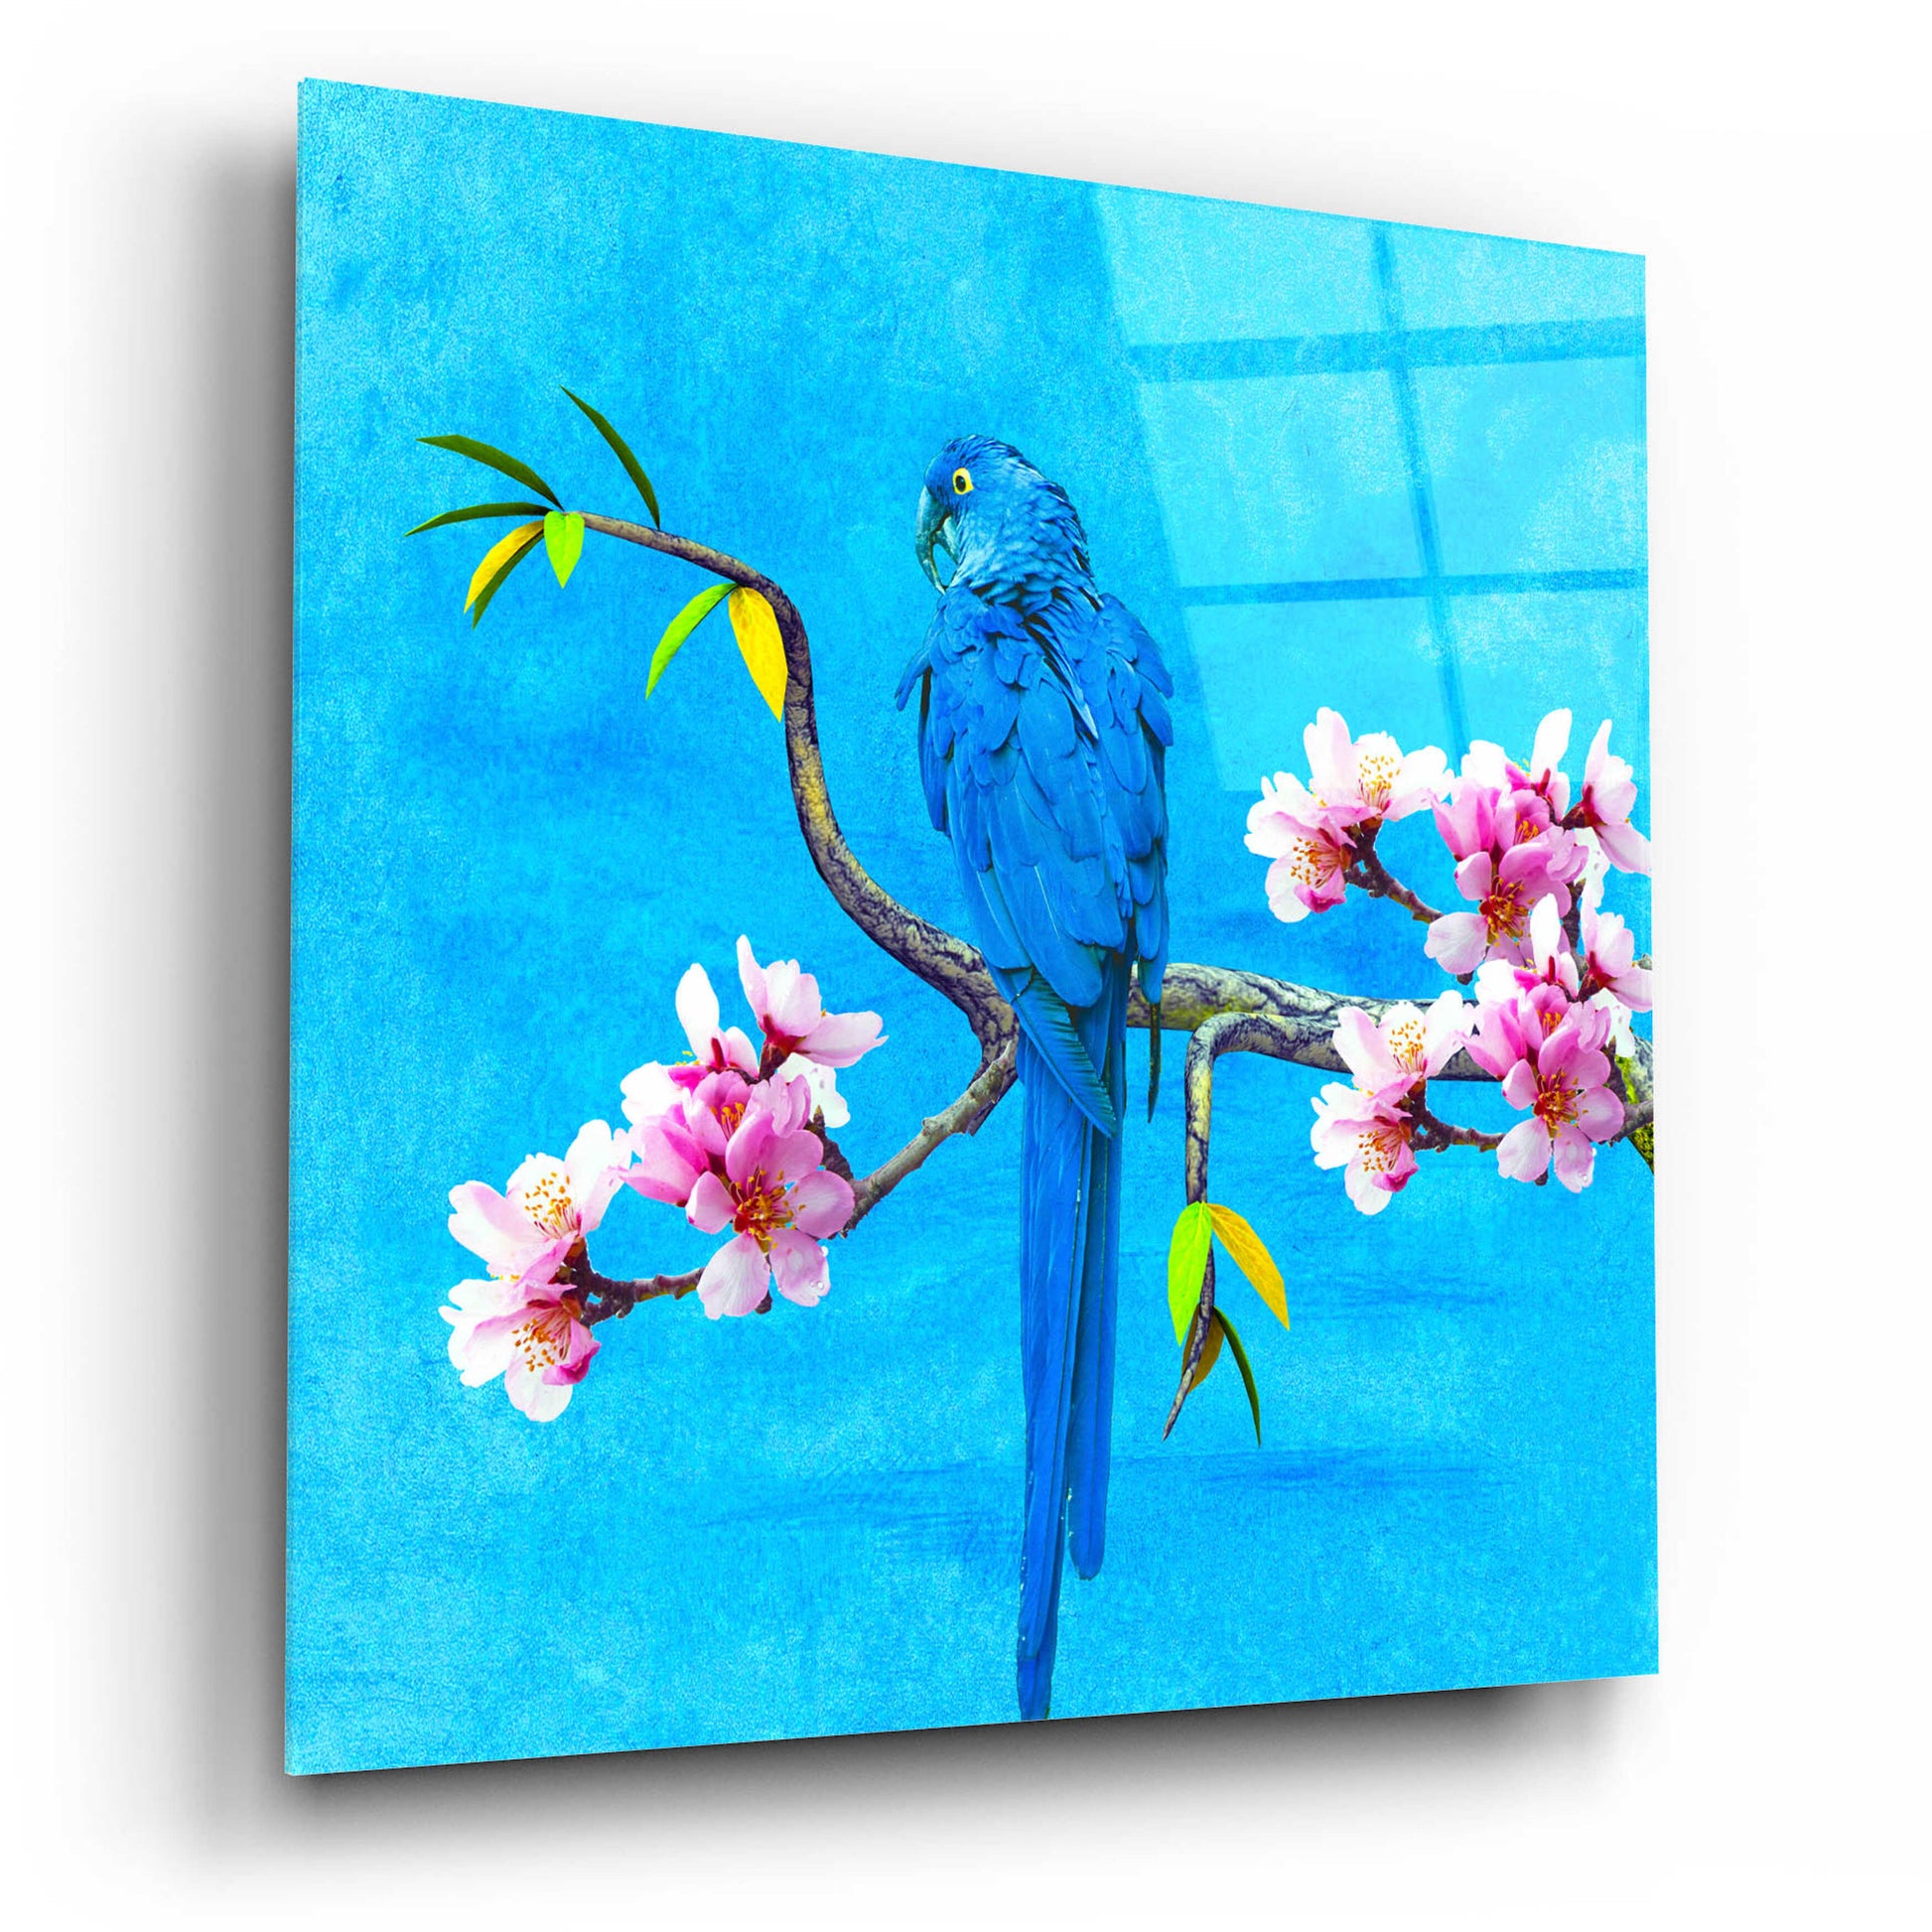 Epic Art 'Spring Bird And Flower' by Ata Alishahi, Acrylic Glass Wall Art,12x12